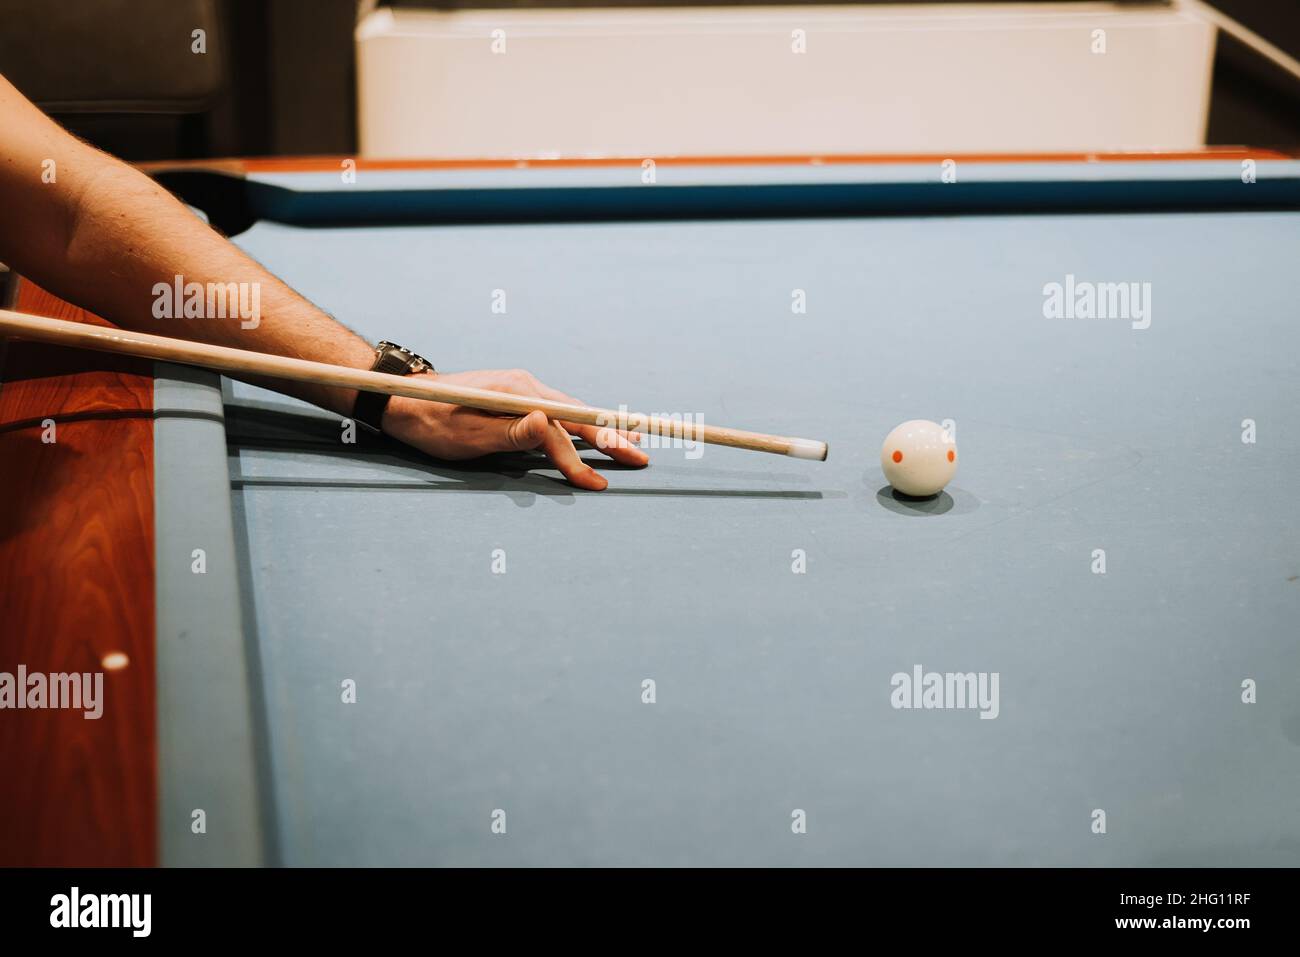 billiard pool table with balls Stock Photo